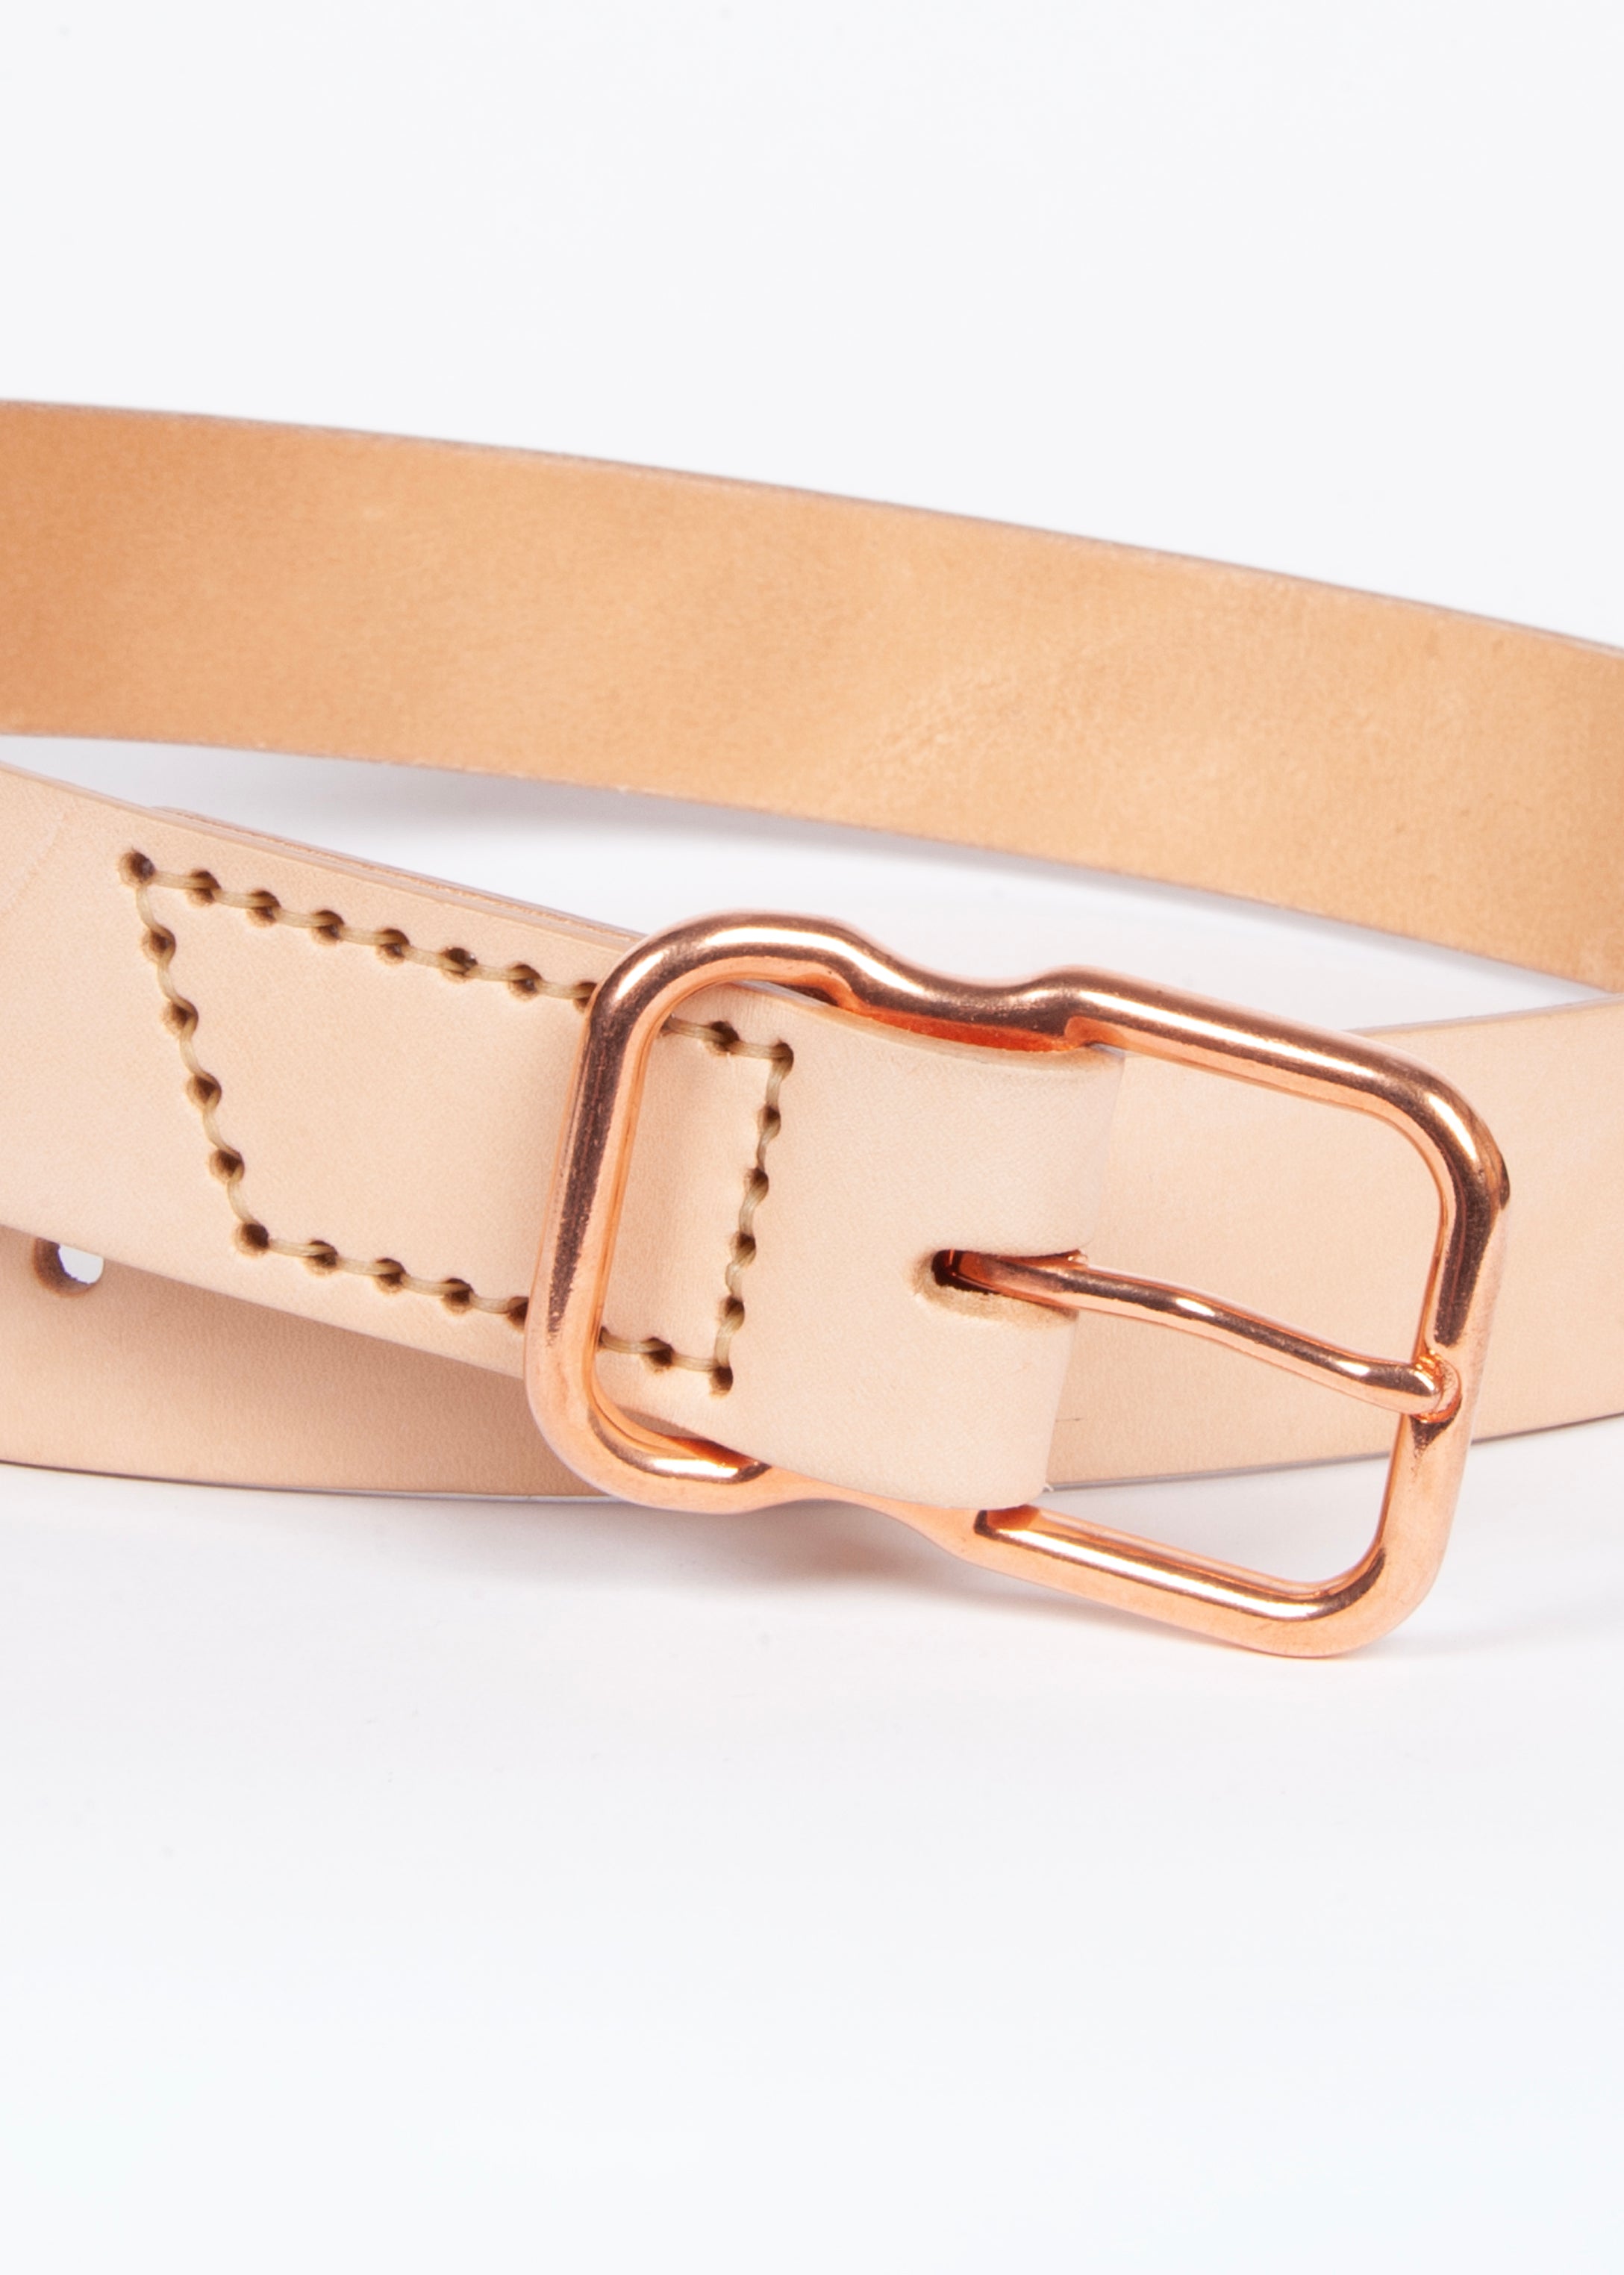 112 Signature Leather Belt - Natural Veg Tan - Copper